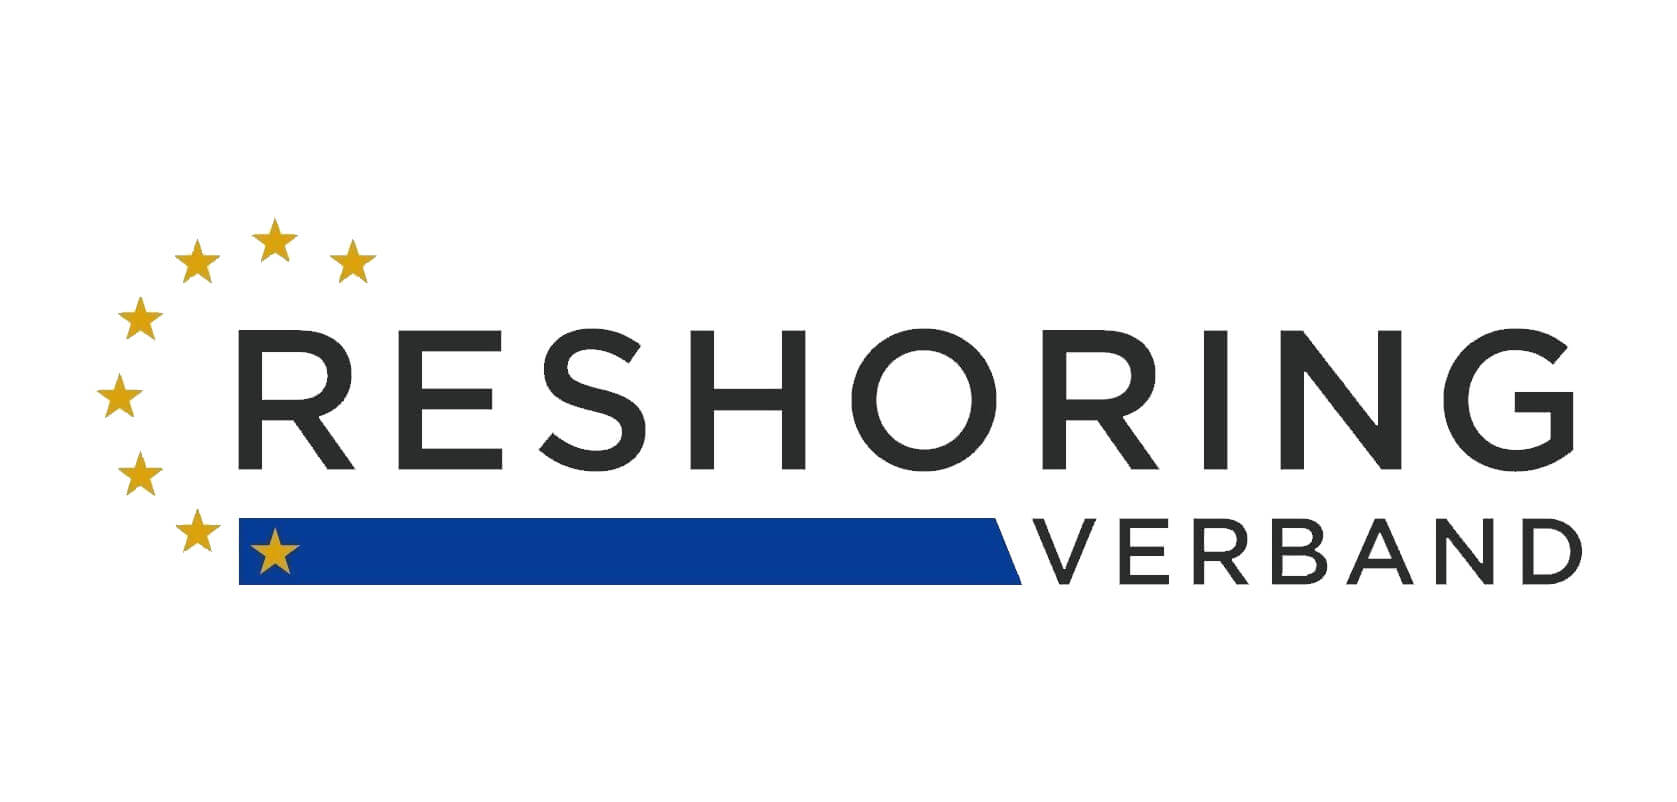 Reshoring Verband - Empowering German Industry.